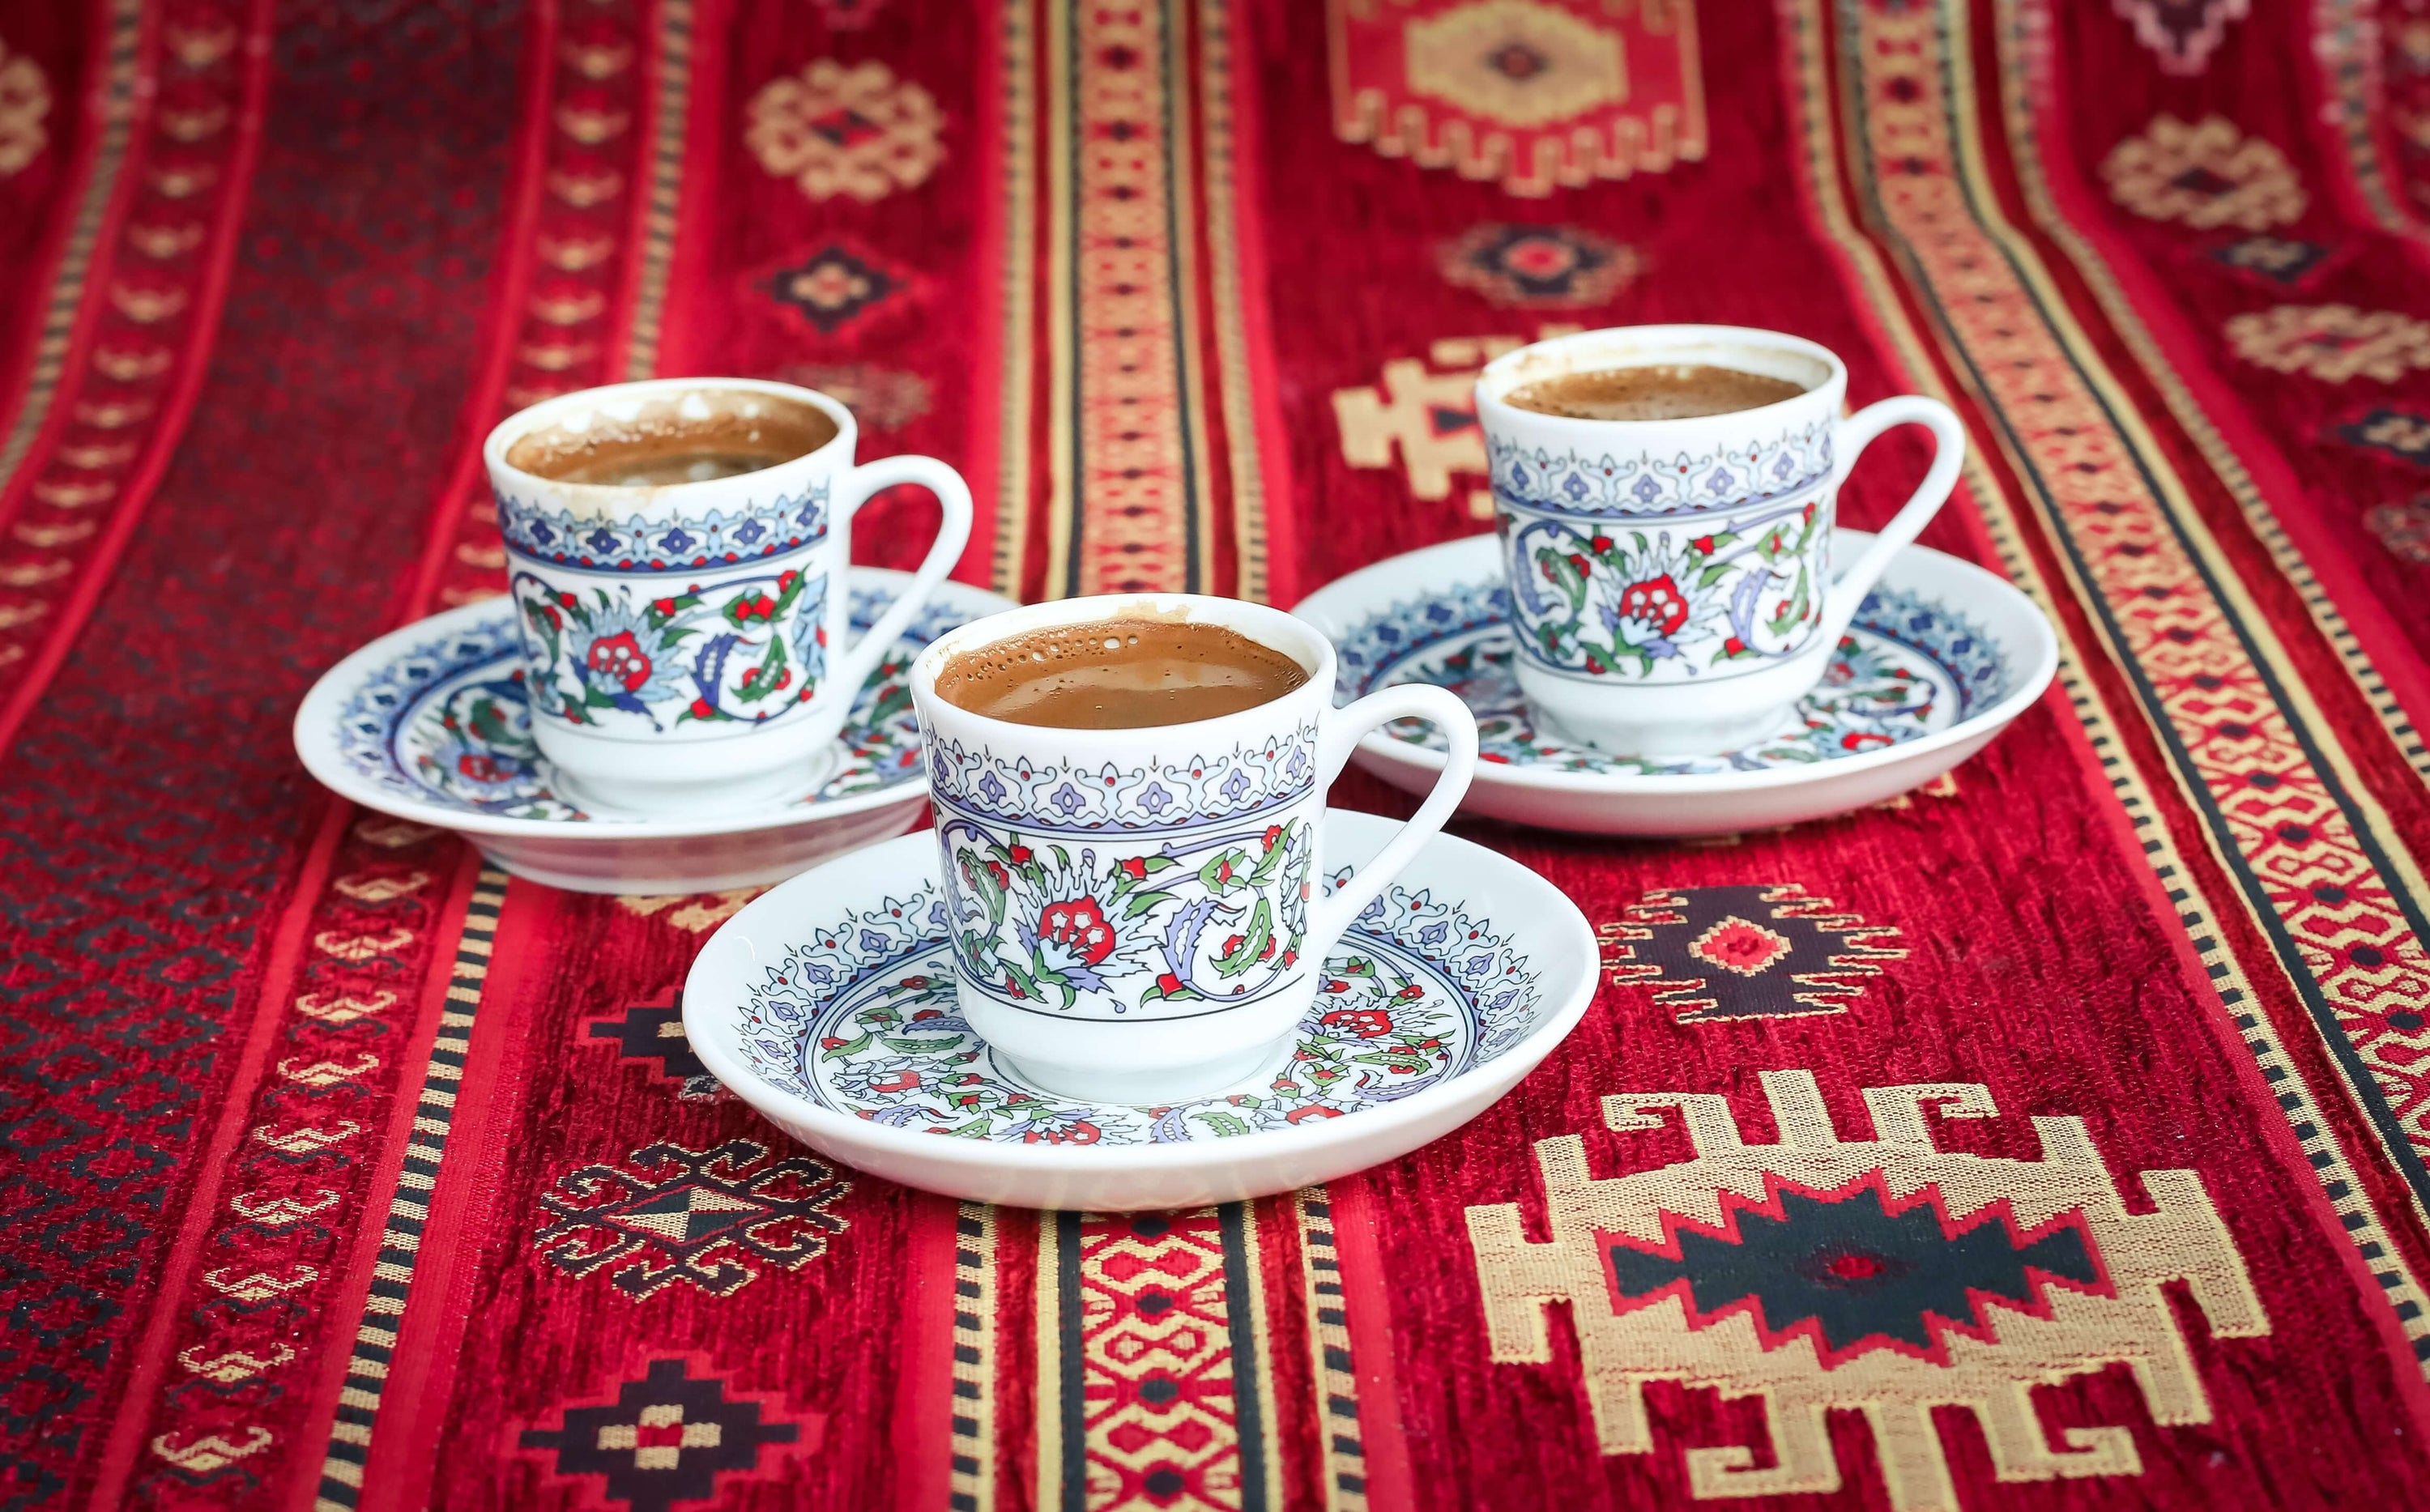 3 cups of turkish coffee